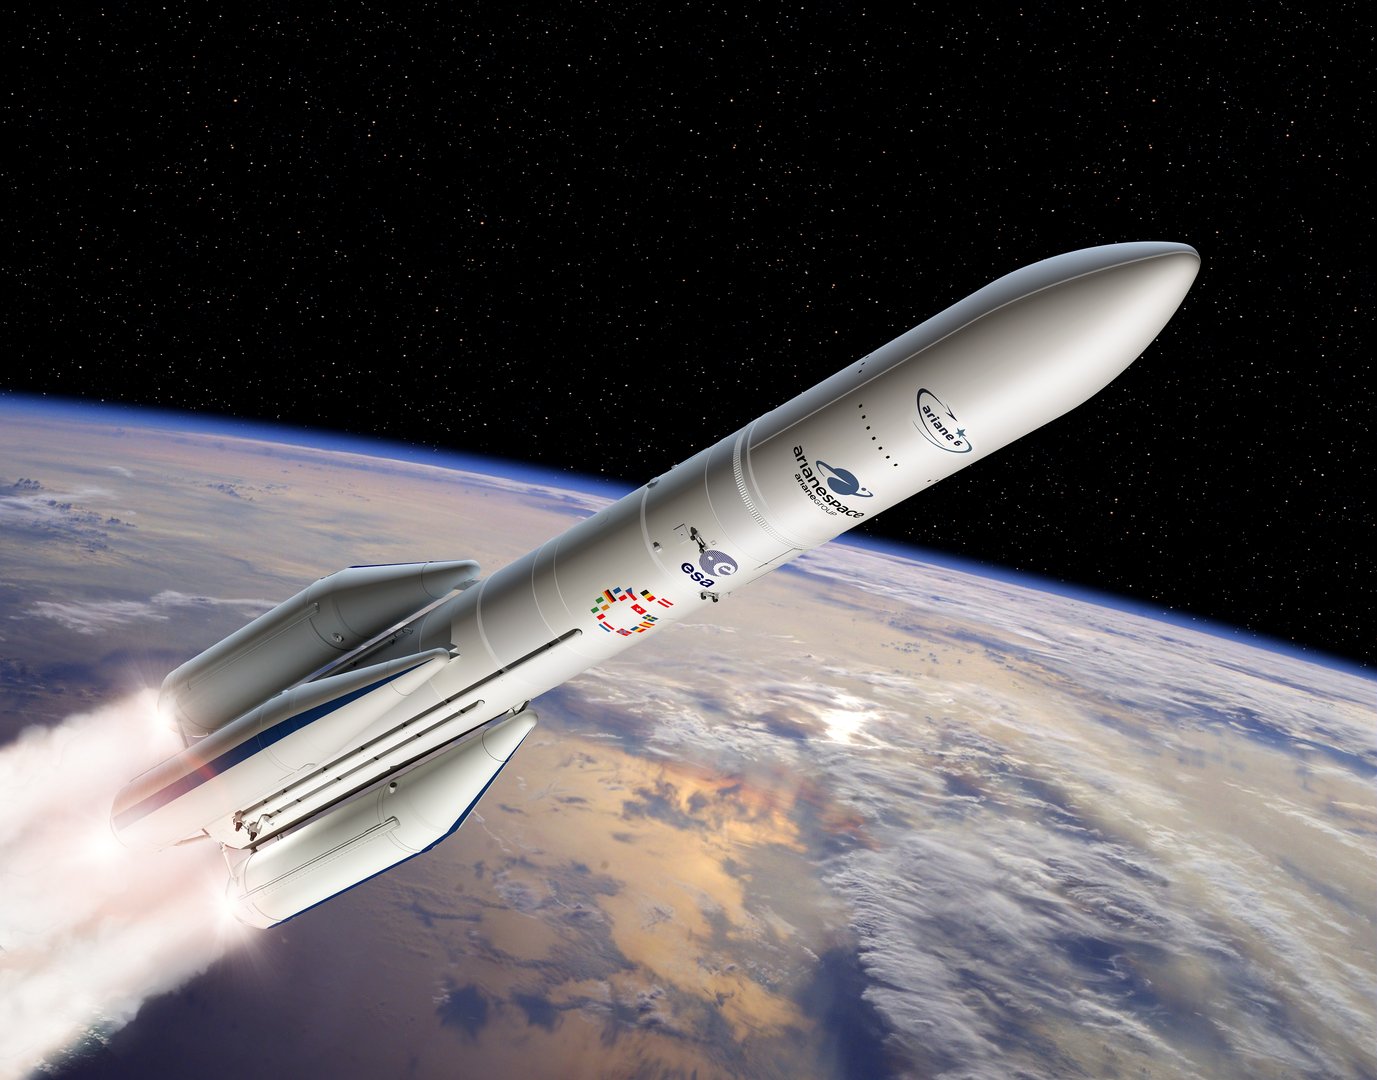 Ariane 6 will flight in the 2020